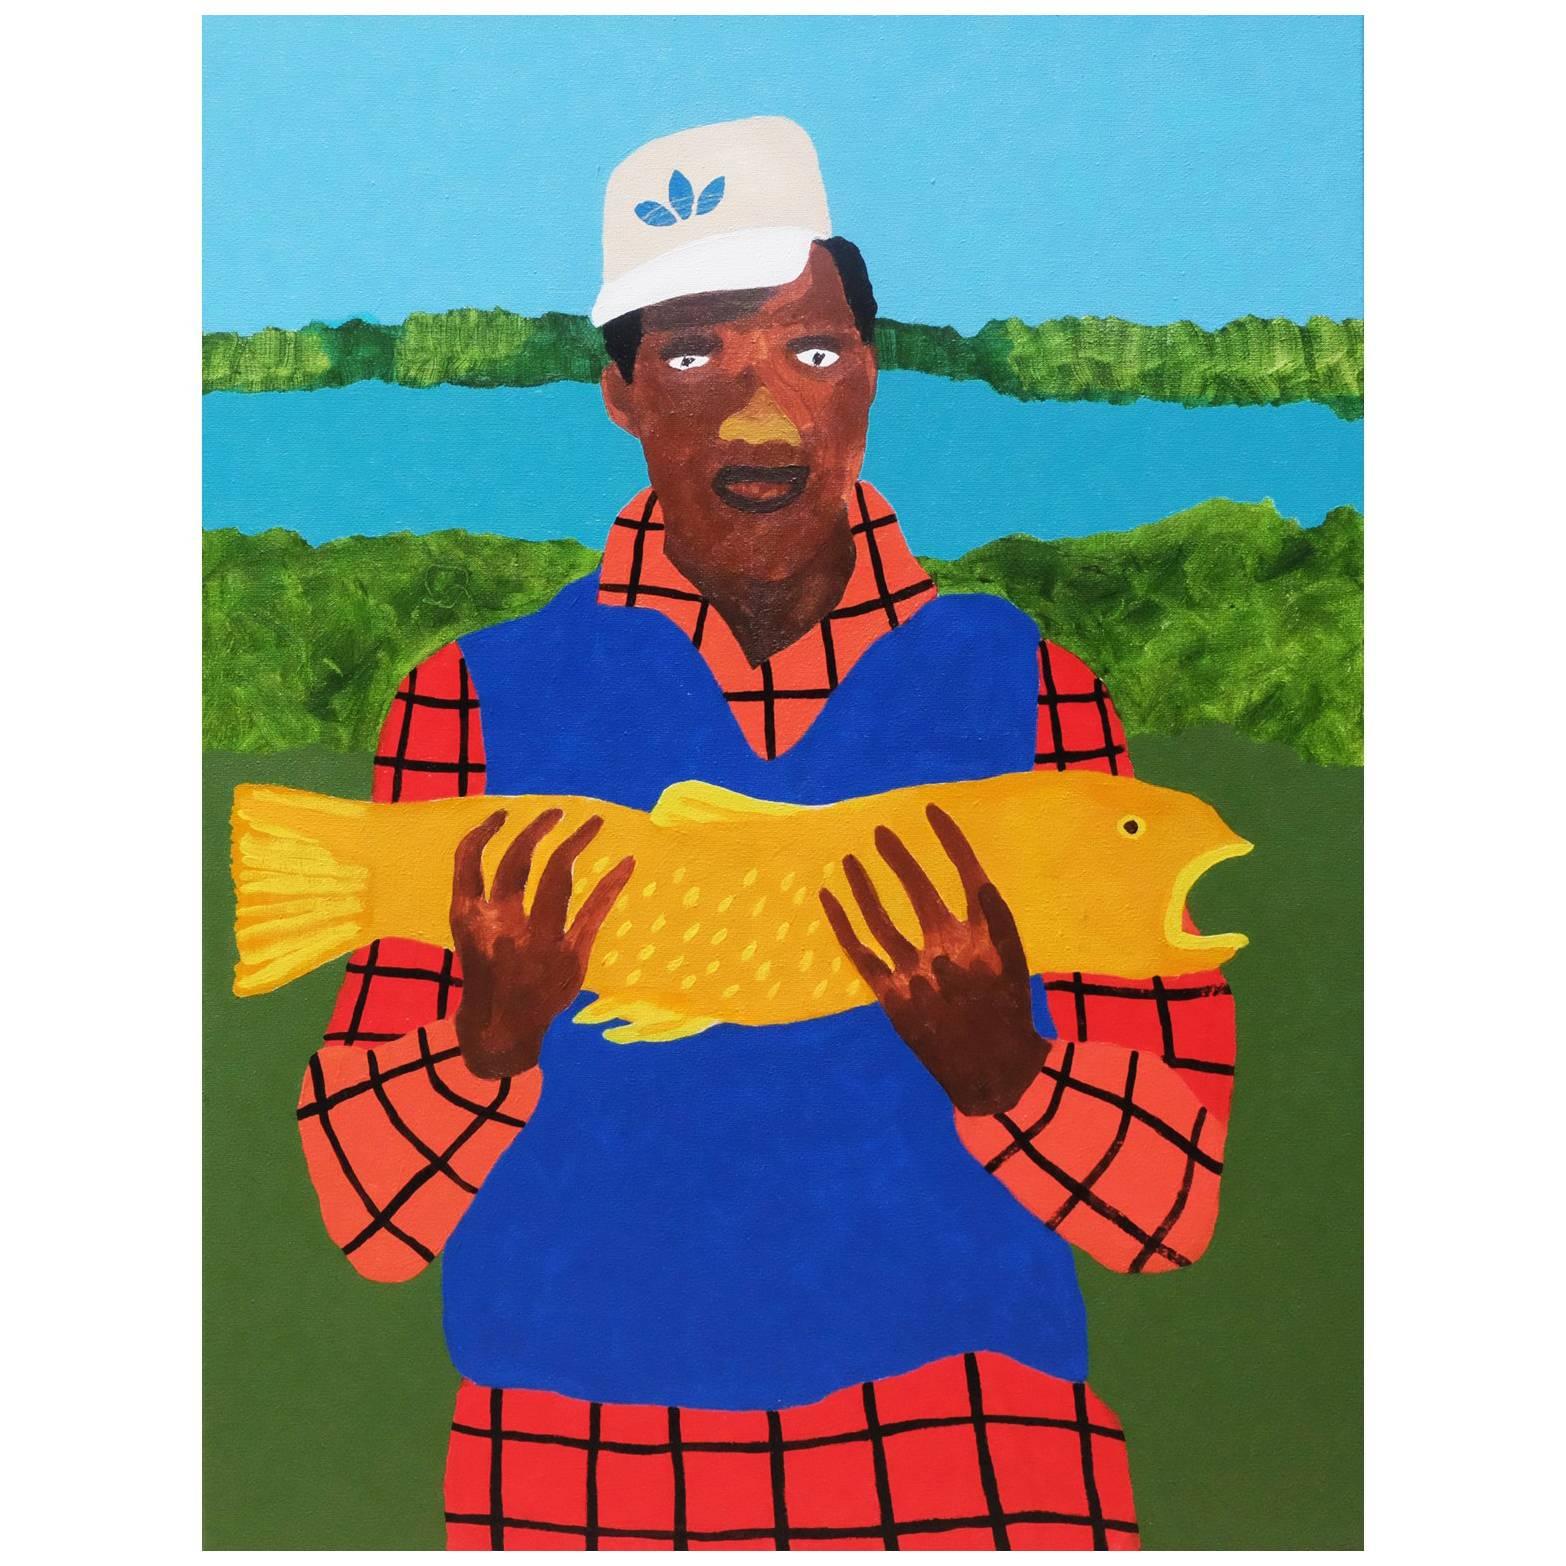 'The Whopper' Portrait Painting by Alan Fears Pop Art Fishing